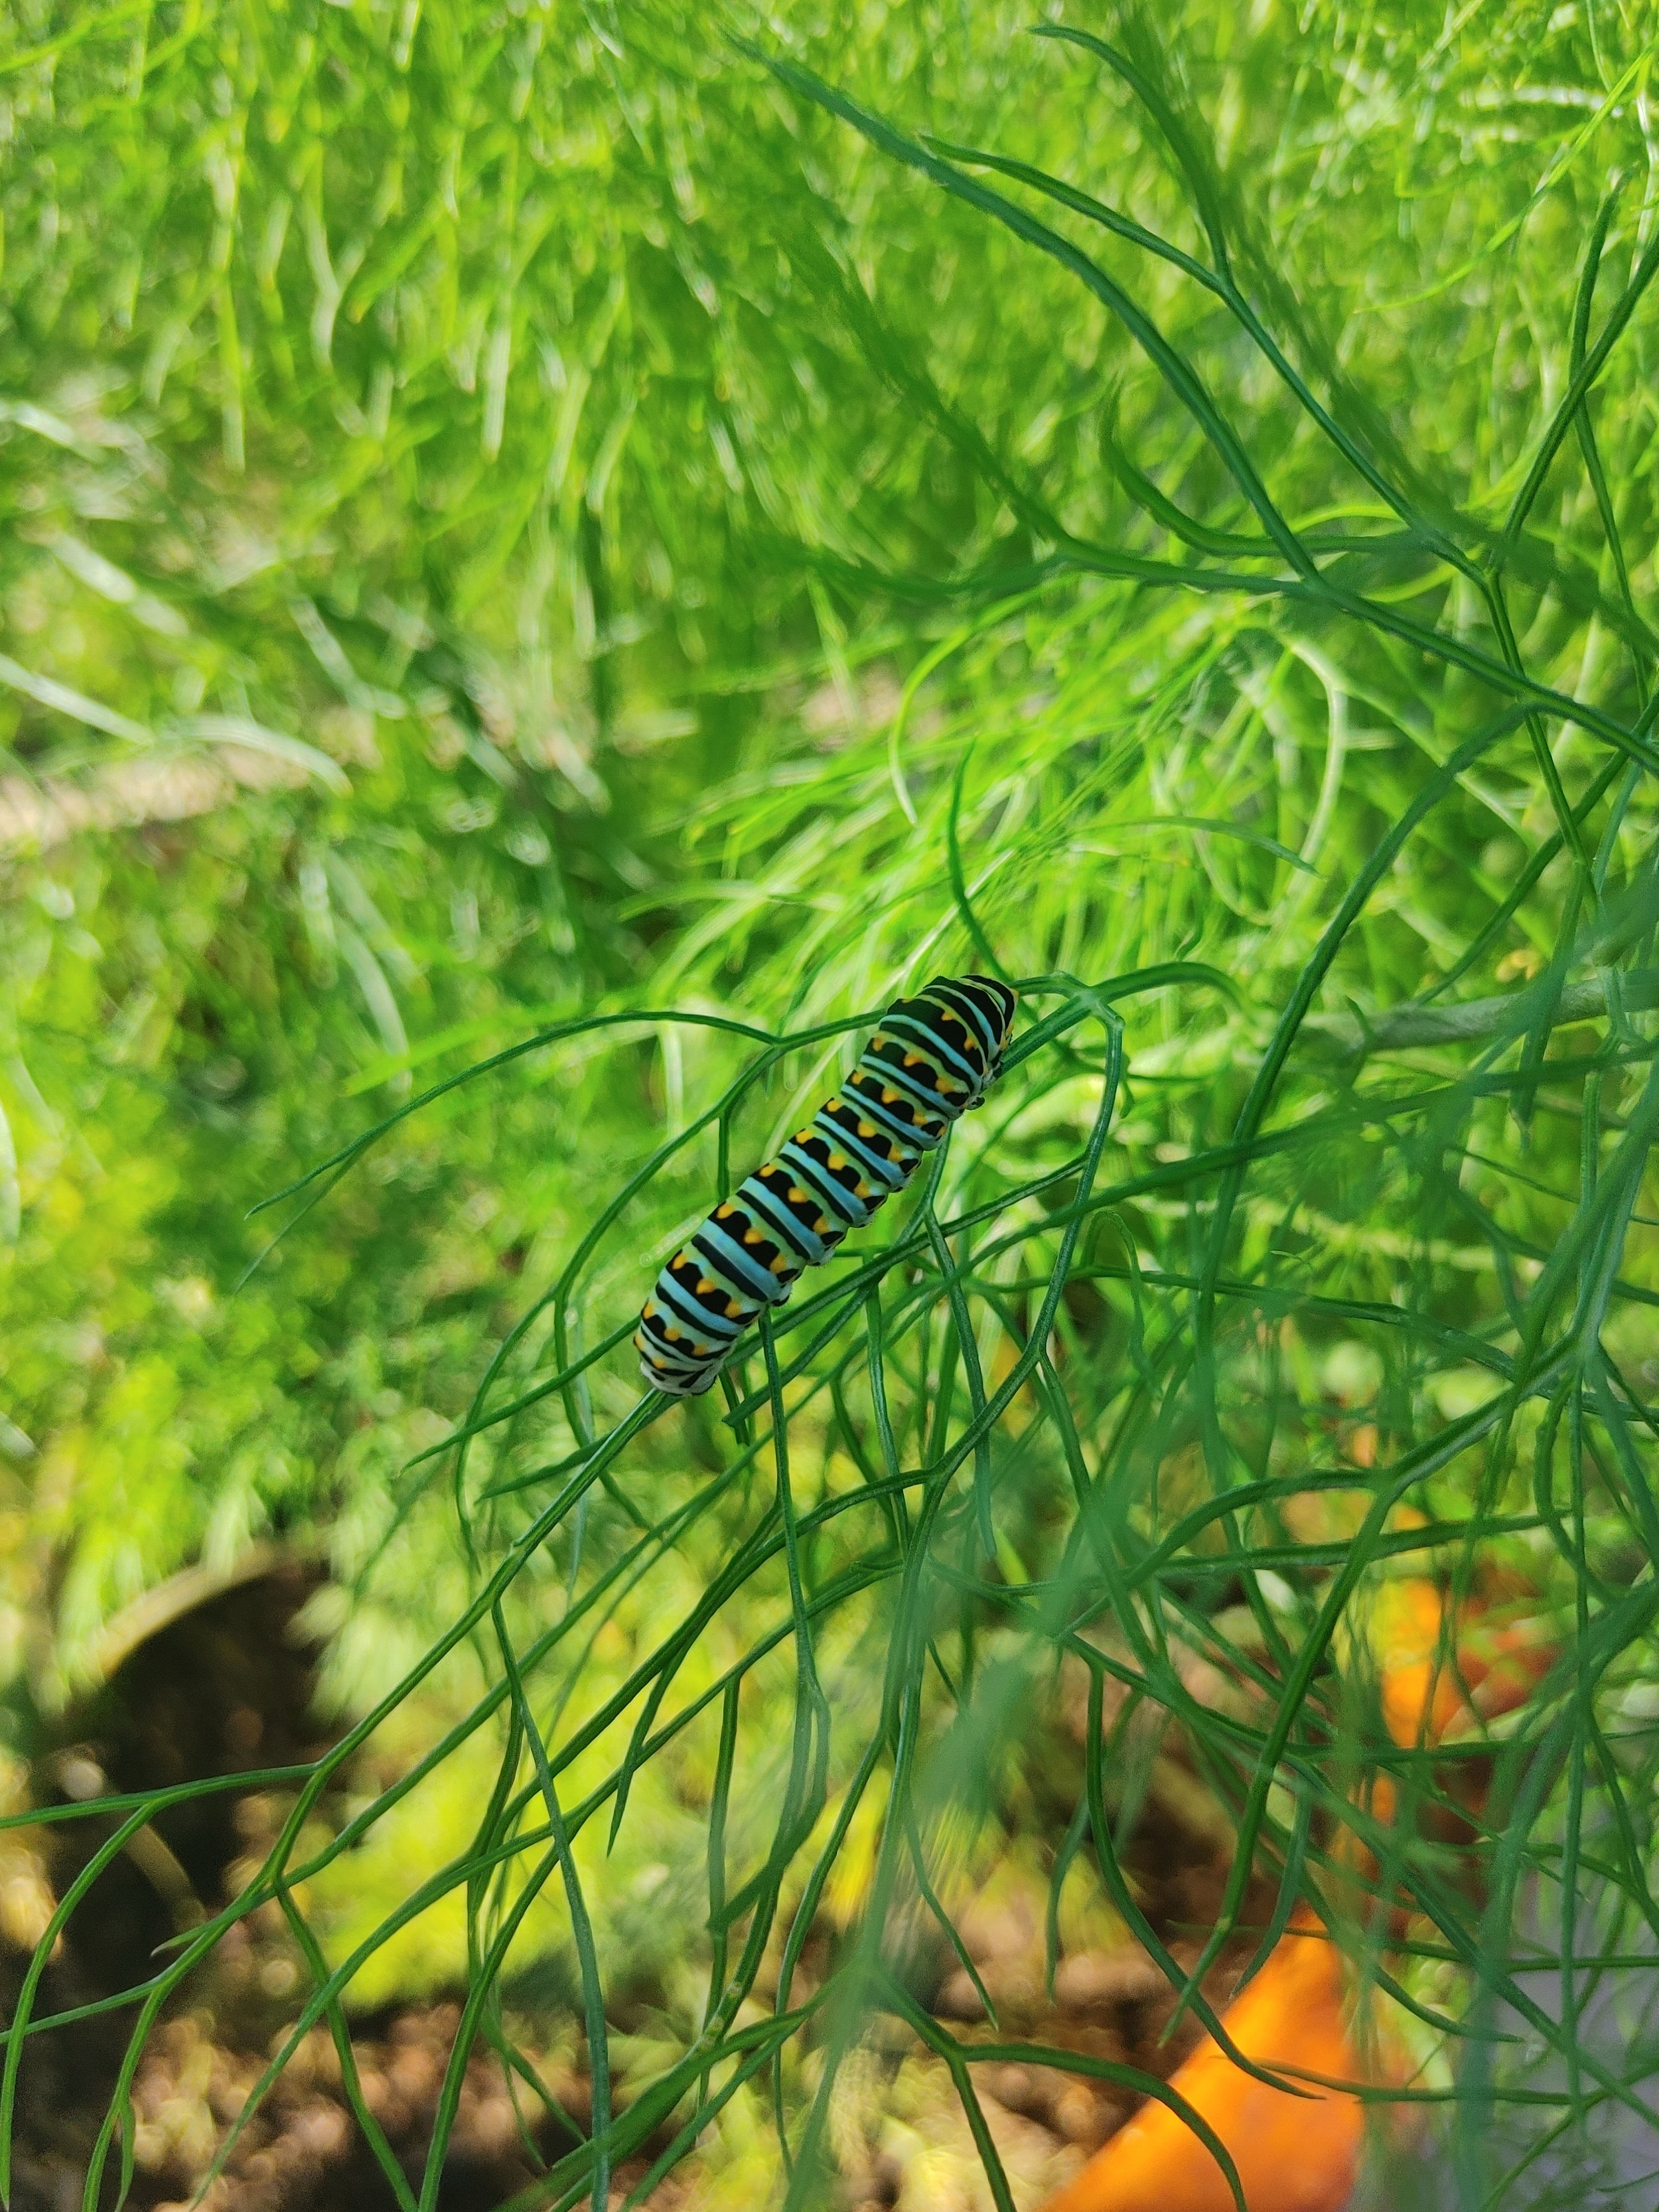  Peeping on the caterpillar chillin’ in Tam’s garden 